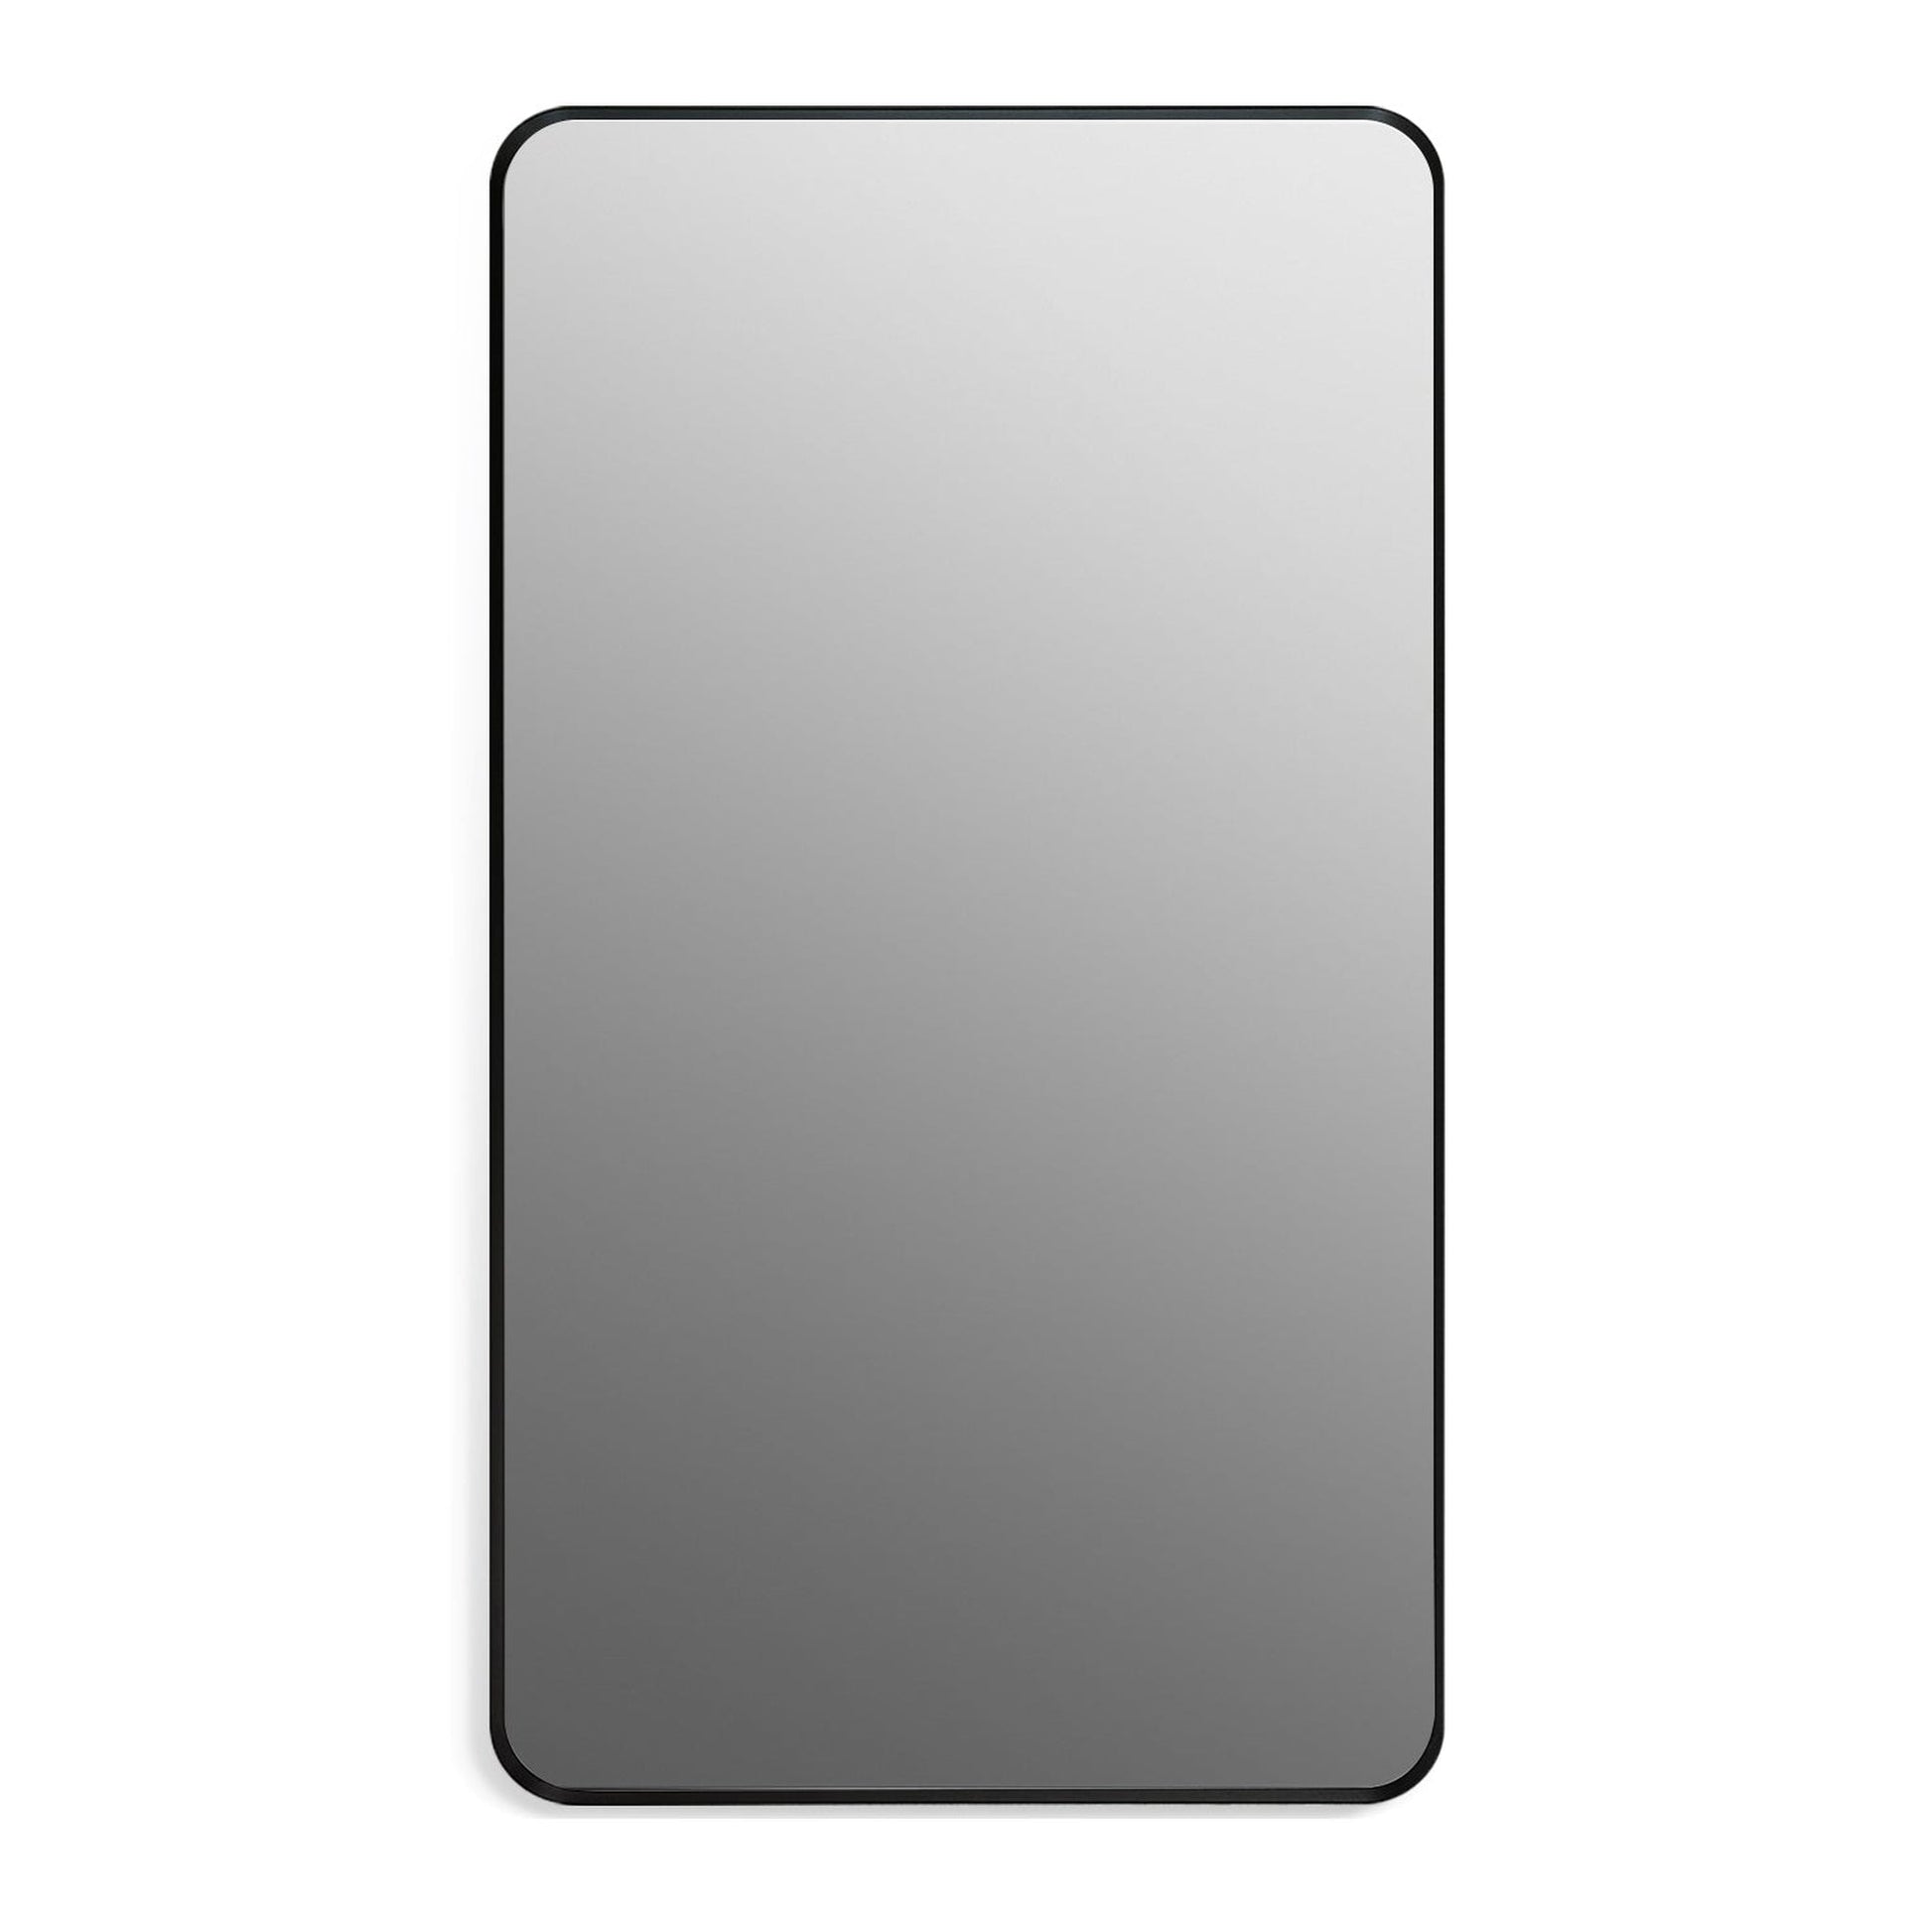 Altair Nettuno 18" x 32" Rectangle Matte Black Aluminum Framed Wall-Mounted Mirror